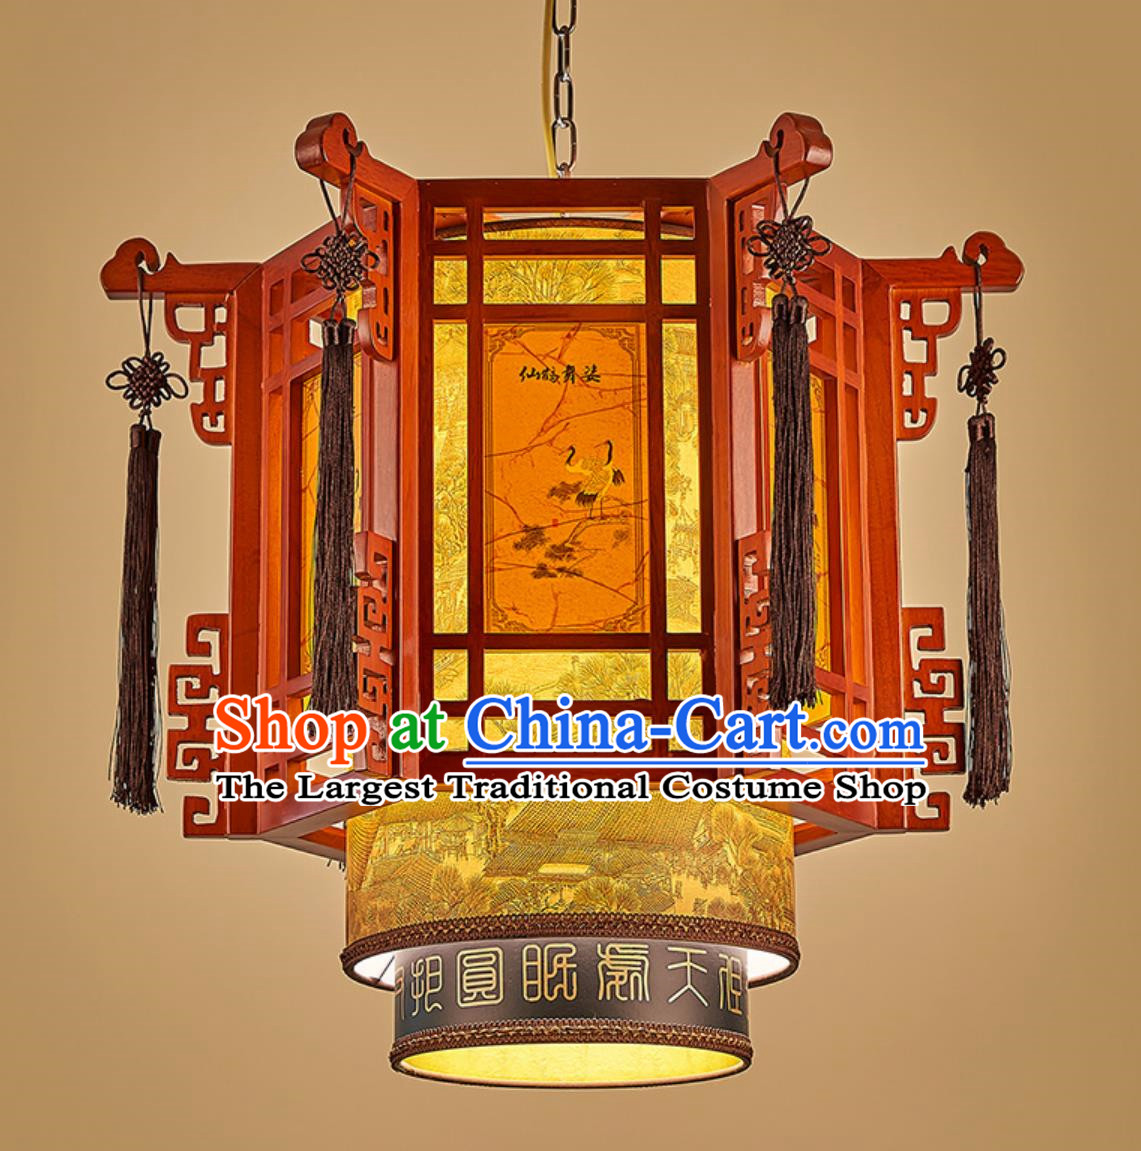 24 Inches Diameter Chinese Antique Lantern Retro Chandelier Solid Wood Sheepskin Lamp Garden Lamp Chinese Style